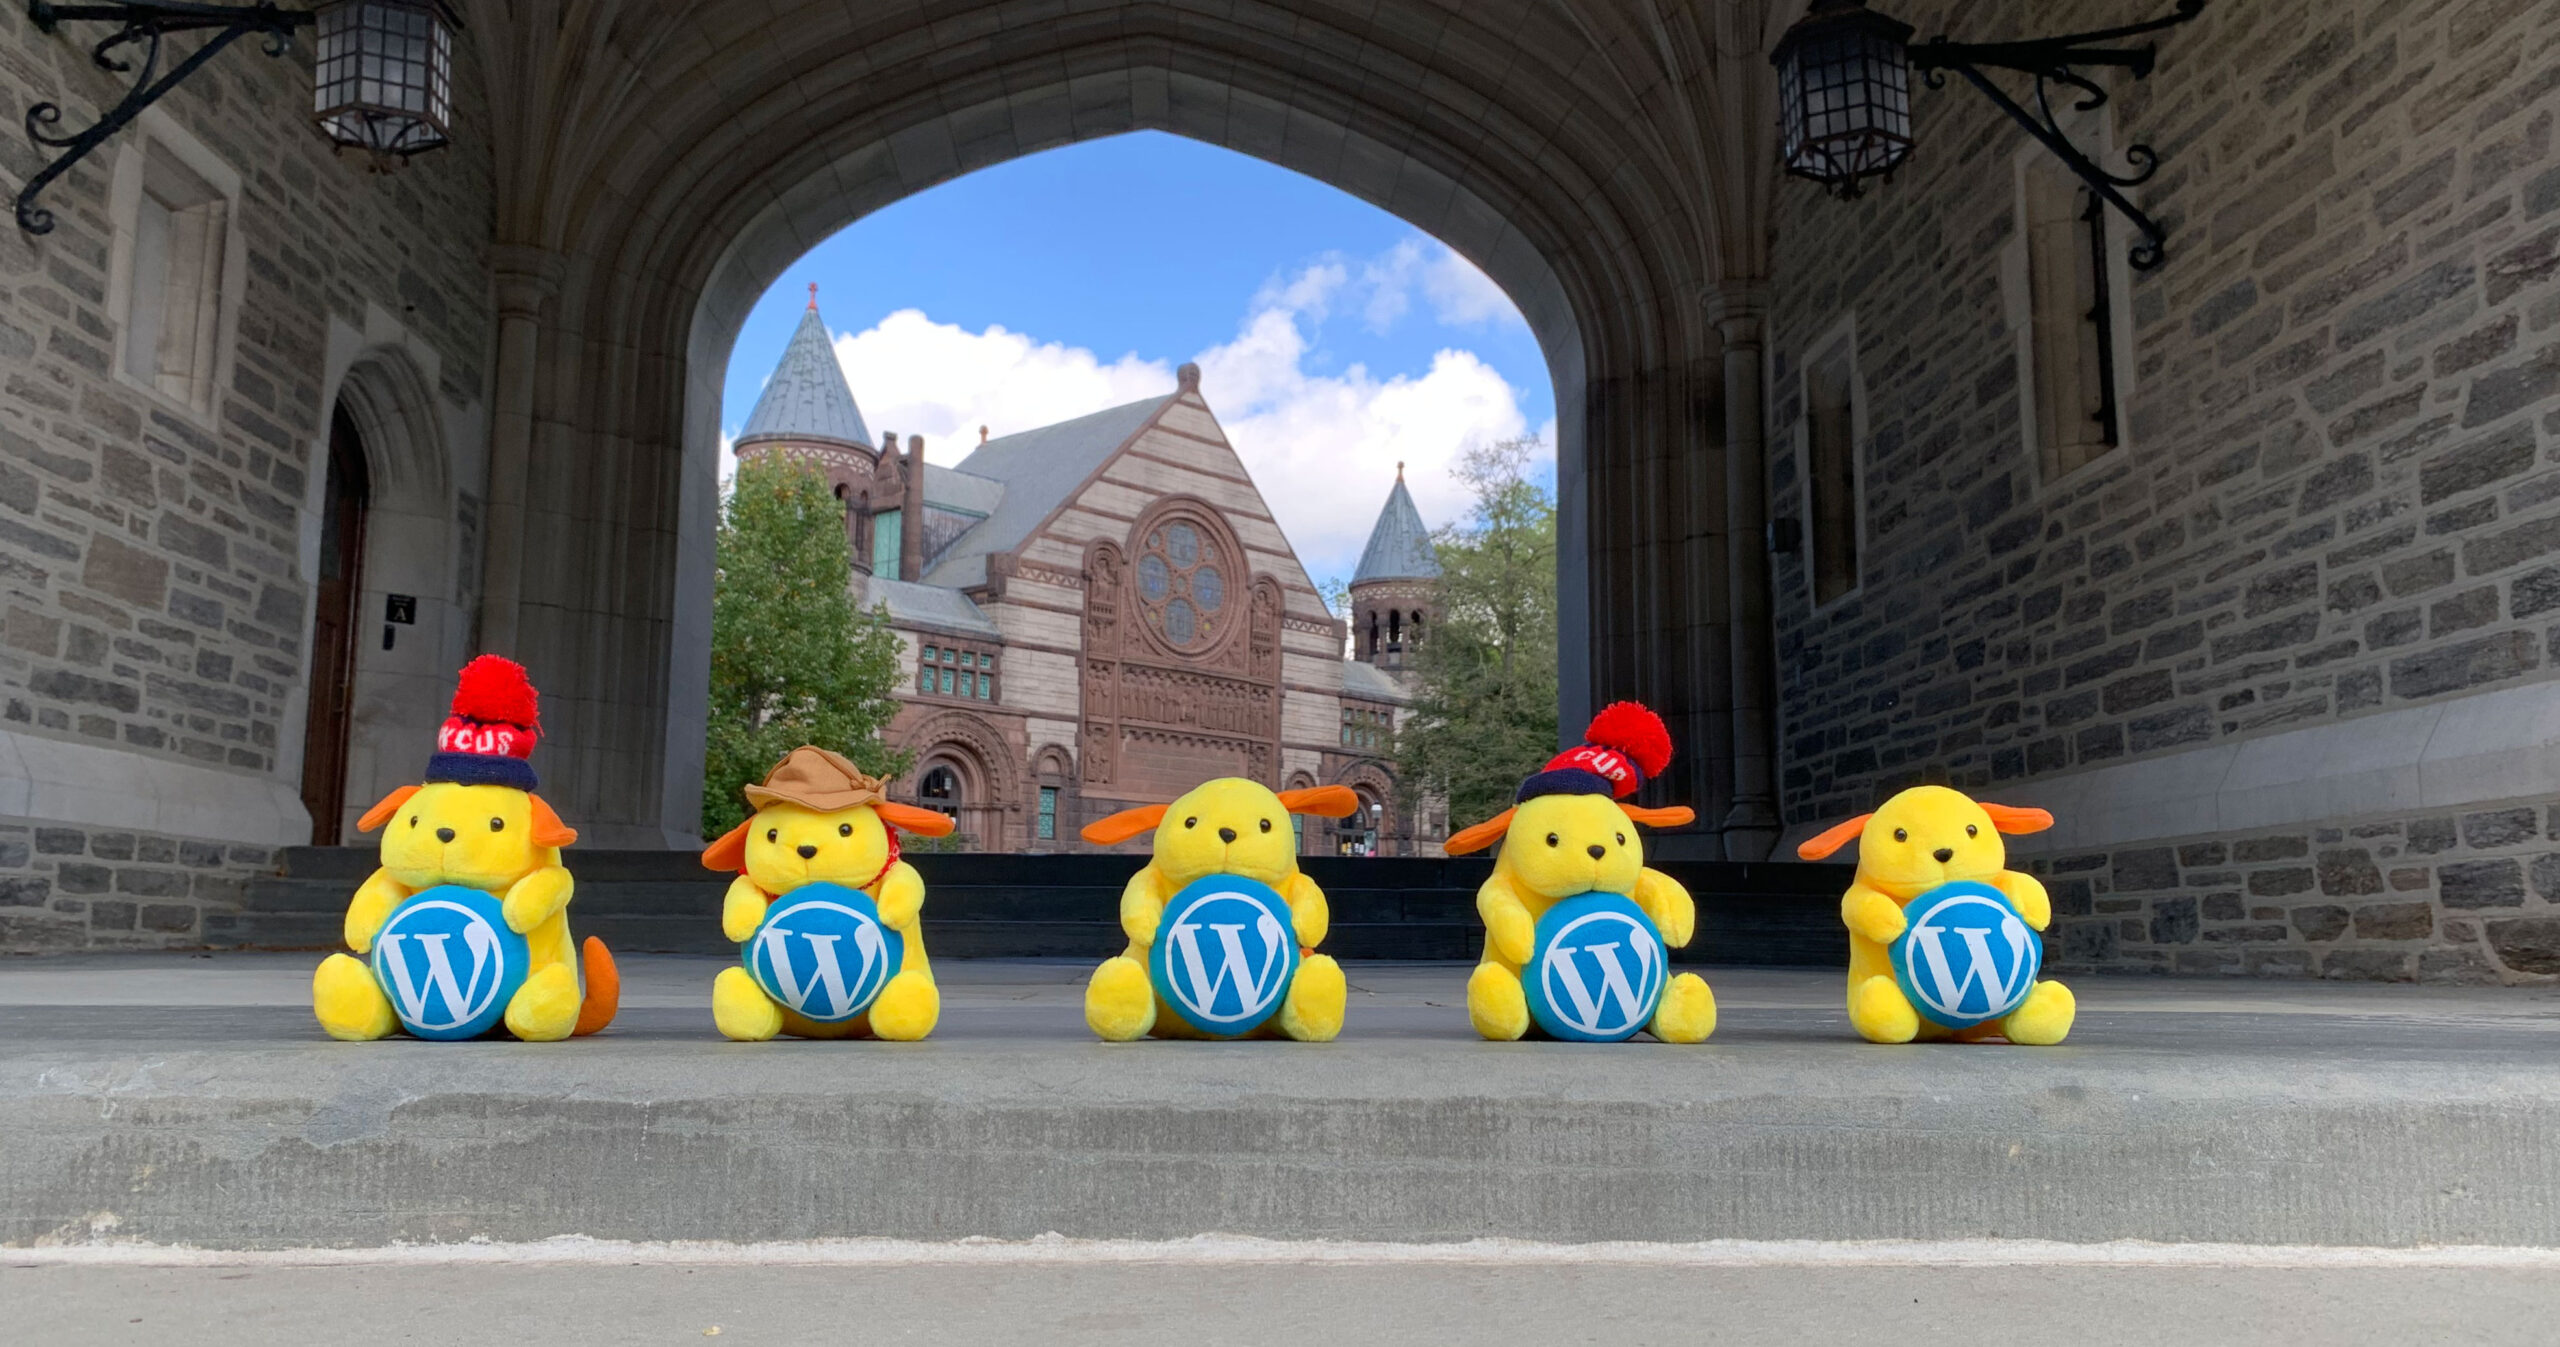 5 stuffed WordPress mascots sitting under Blair Arch, in front of Alexander Hall